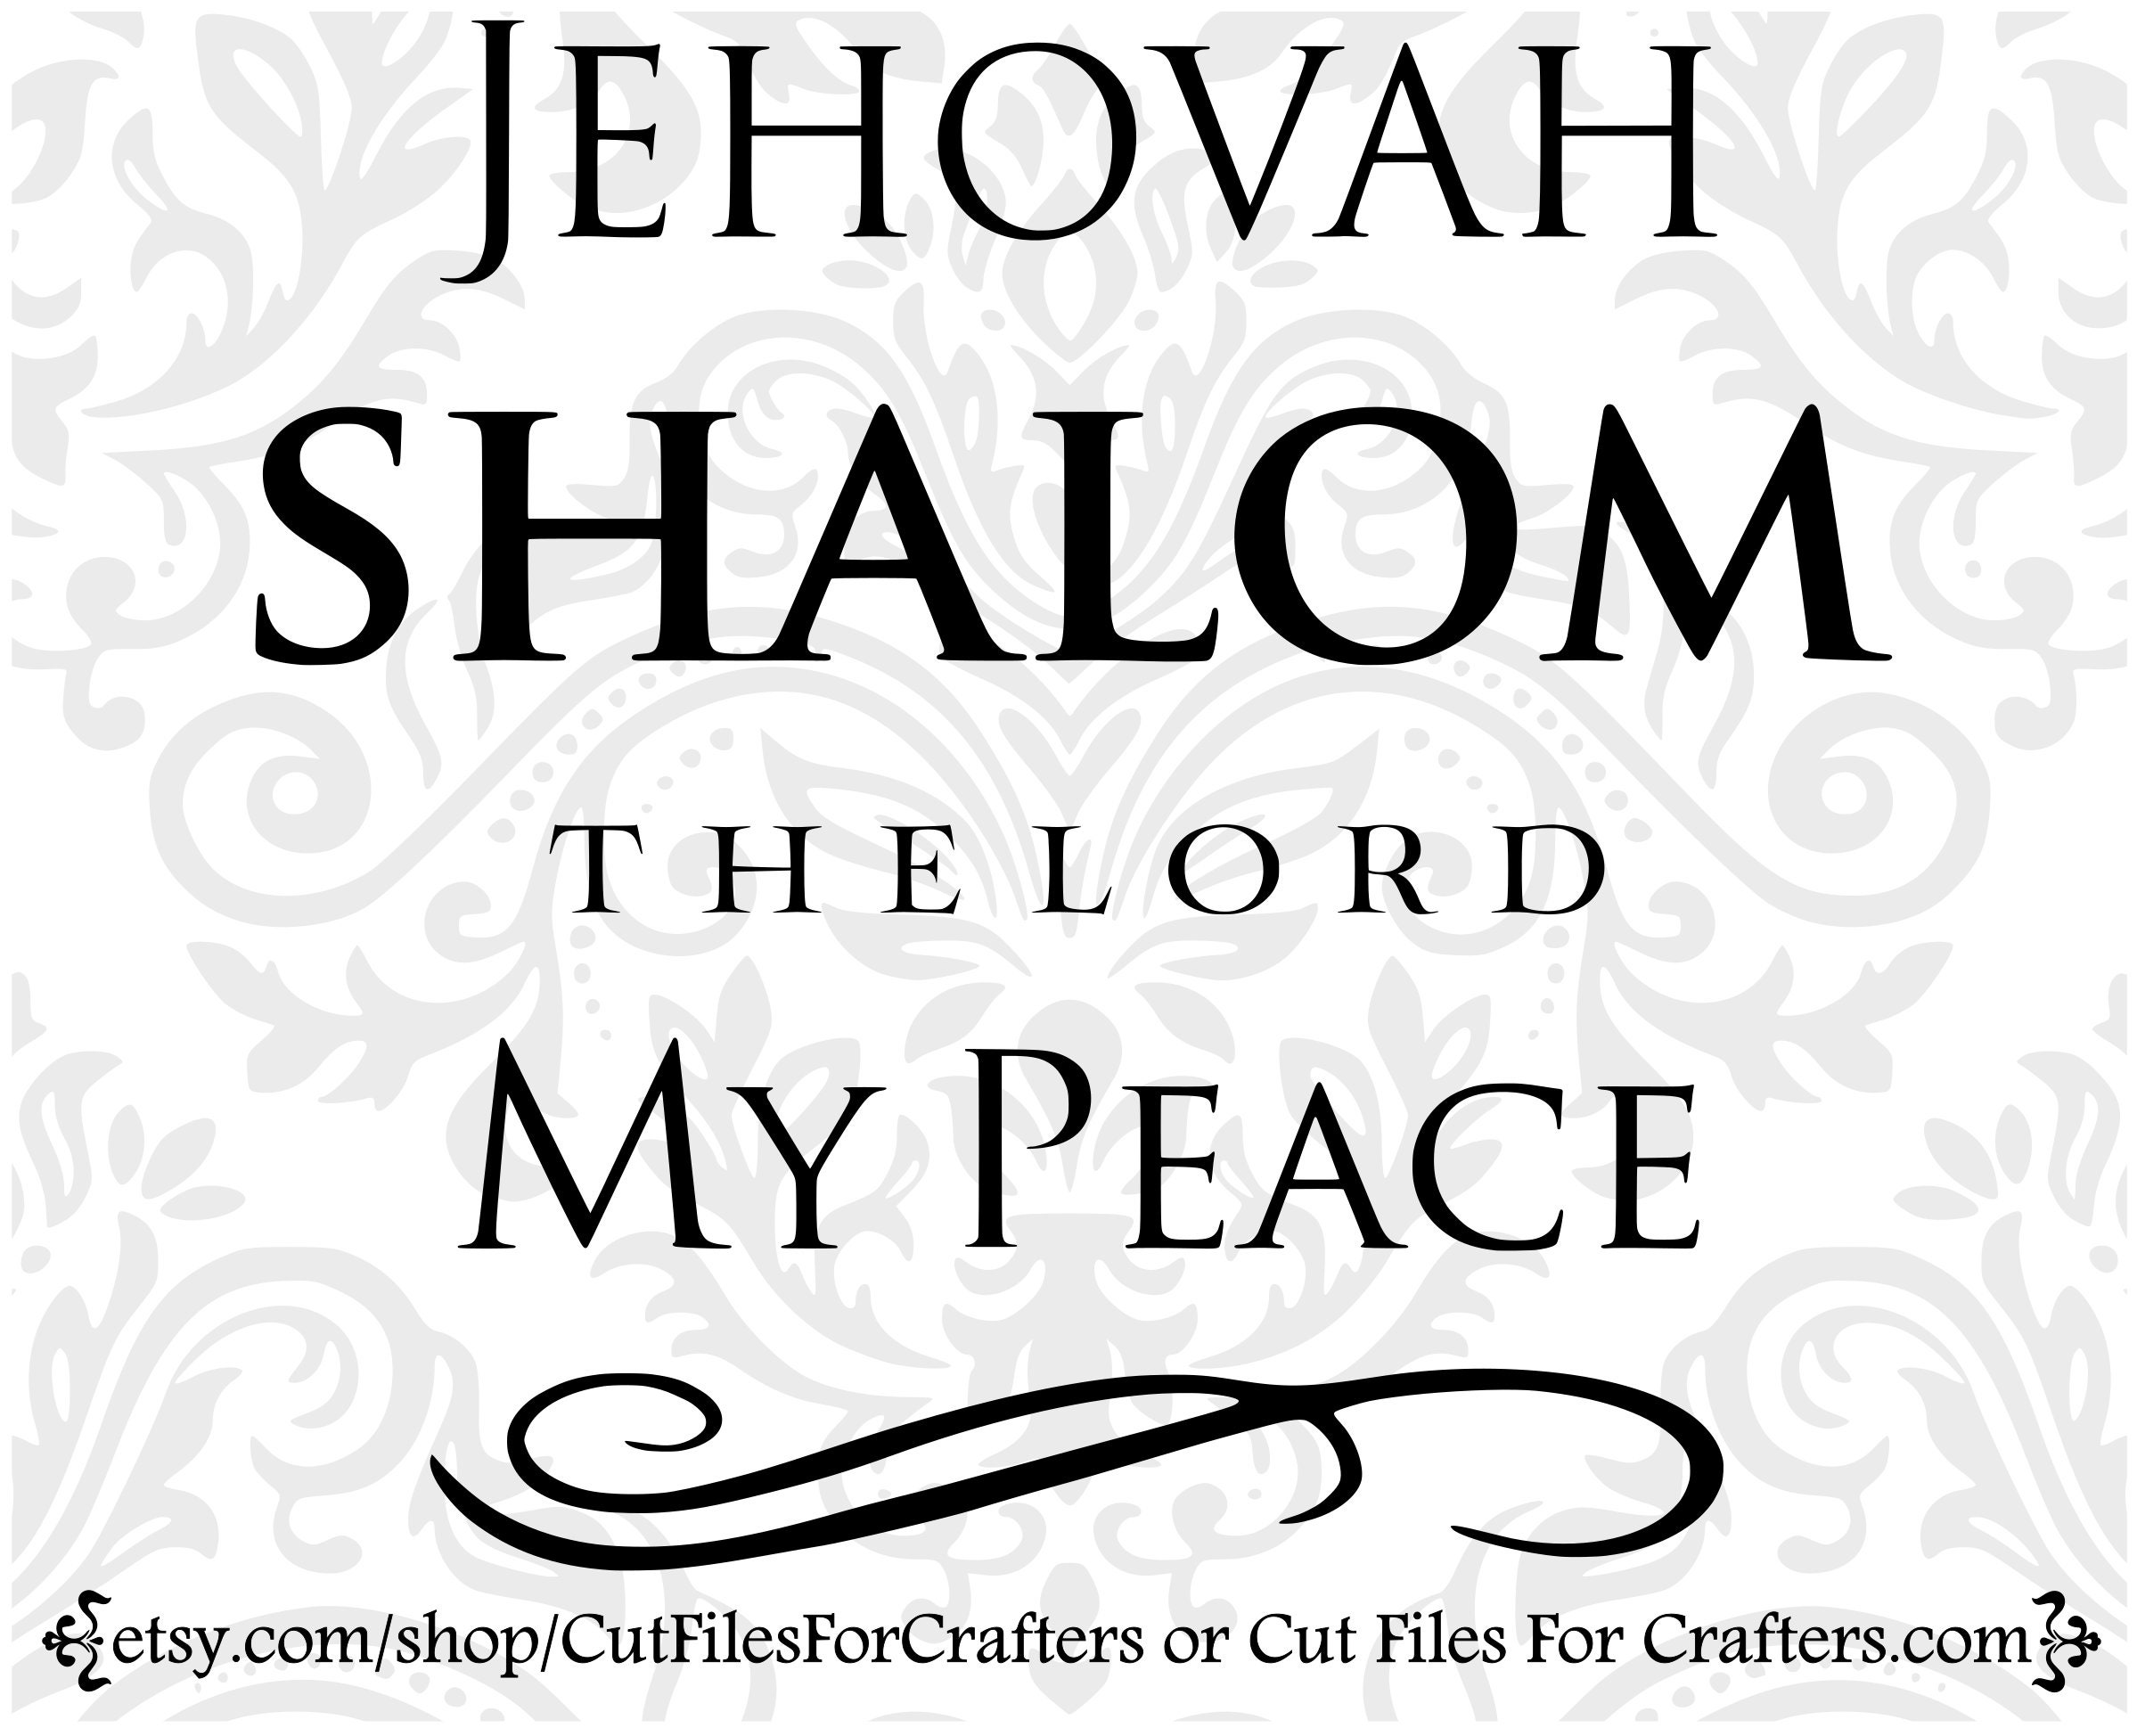 Yahweh Shalom – He is my Peace!